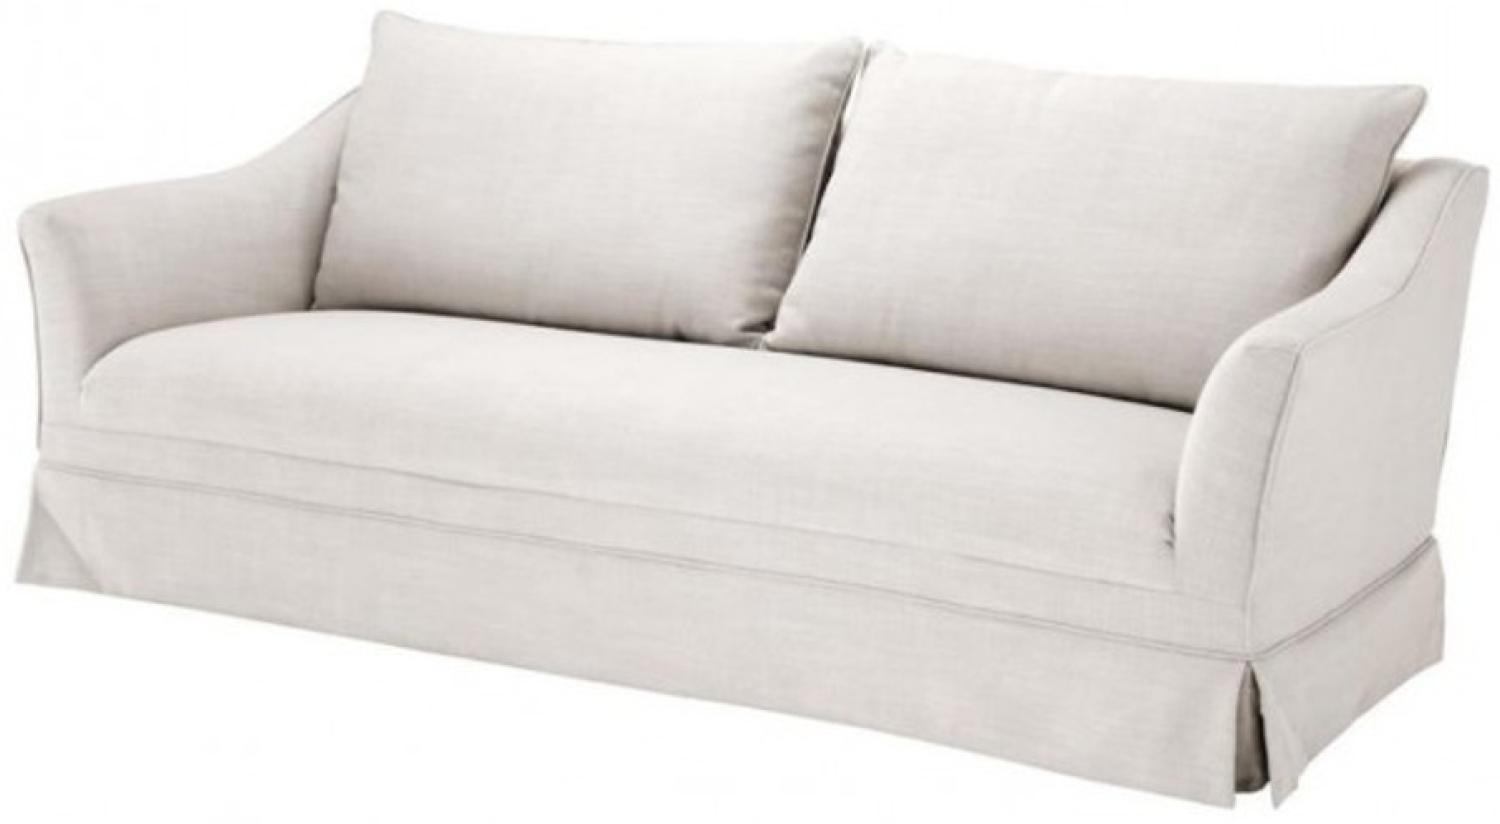 Casa Padrino Luxus Sofa Panama Natural - Limited Edition Bild 1